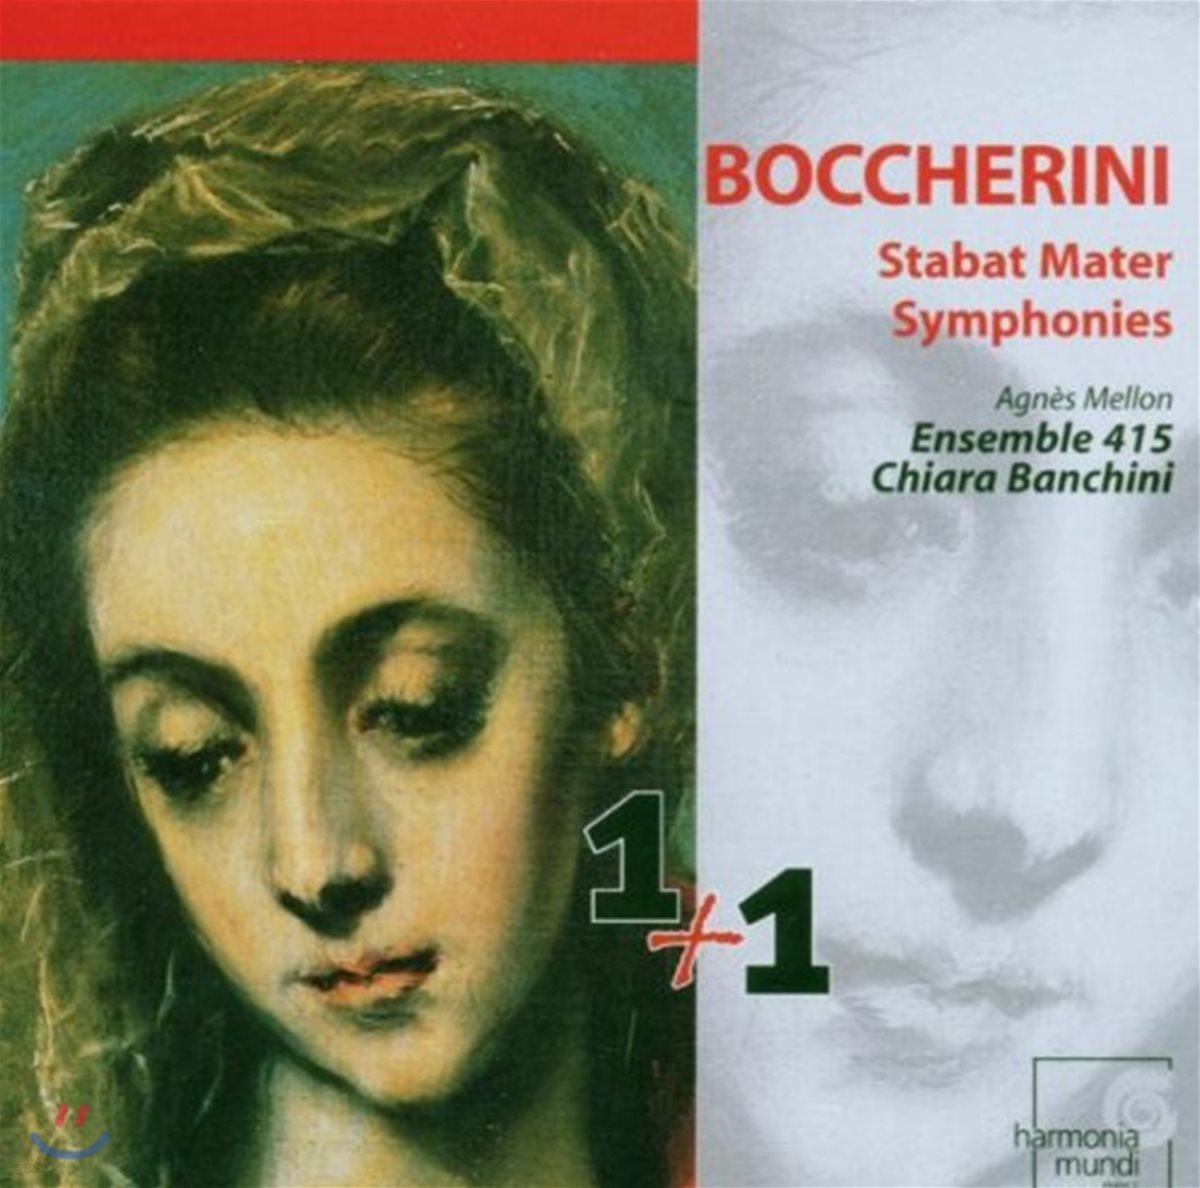 Chiara Banchini 보케리니: 스타바트 마테르, 교향곡 - 앙상블 415, 키아라 반키니 (Boccherini: Stabat Mater, Symphonies)